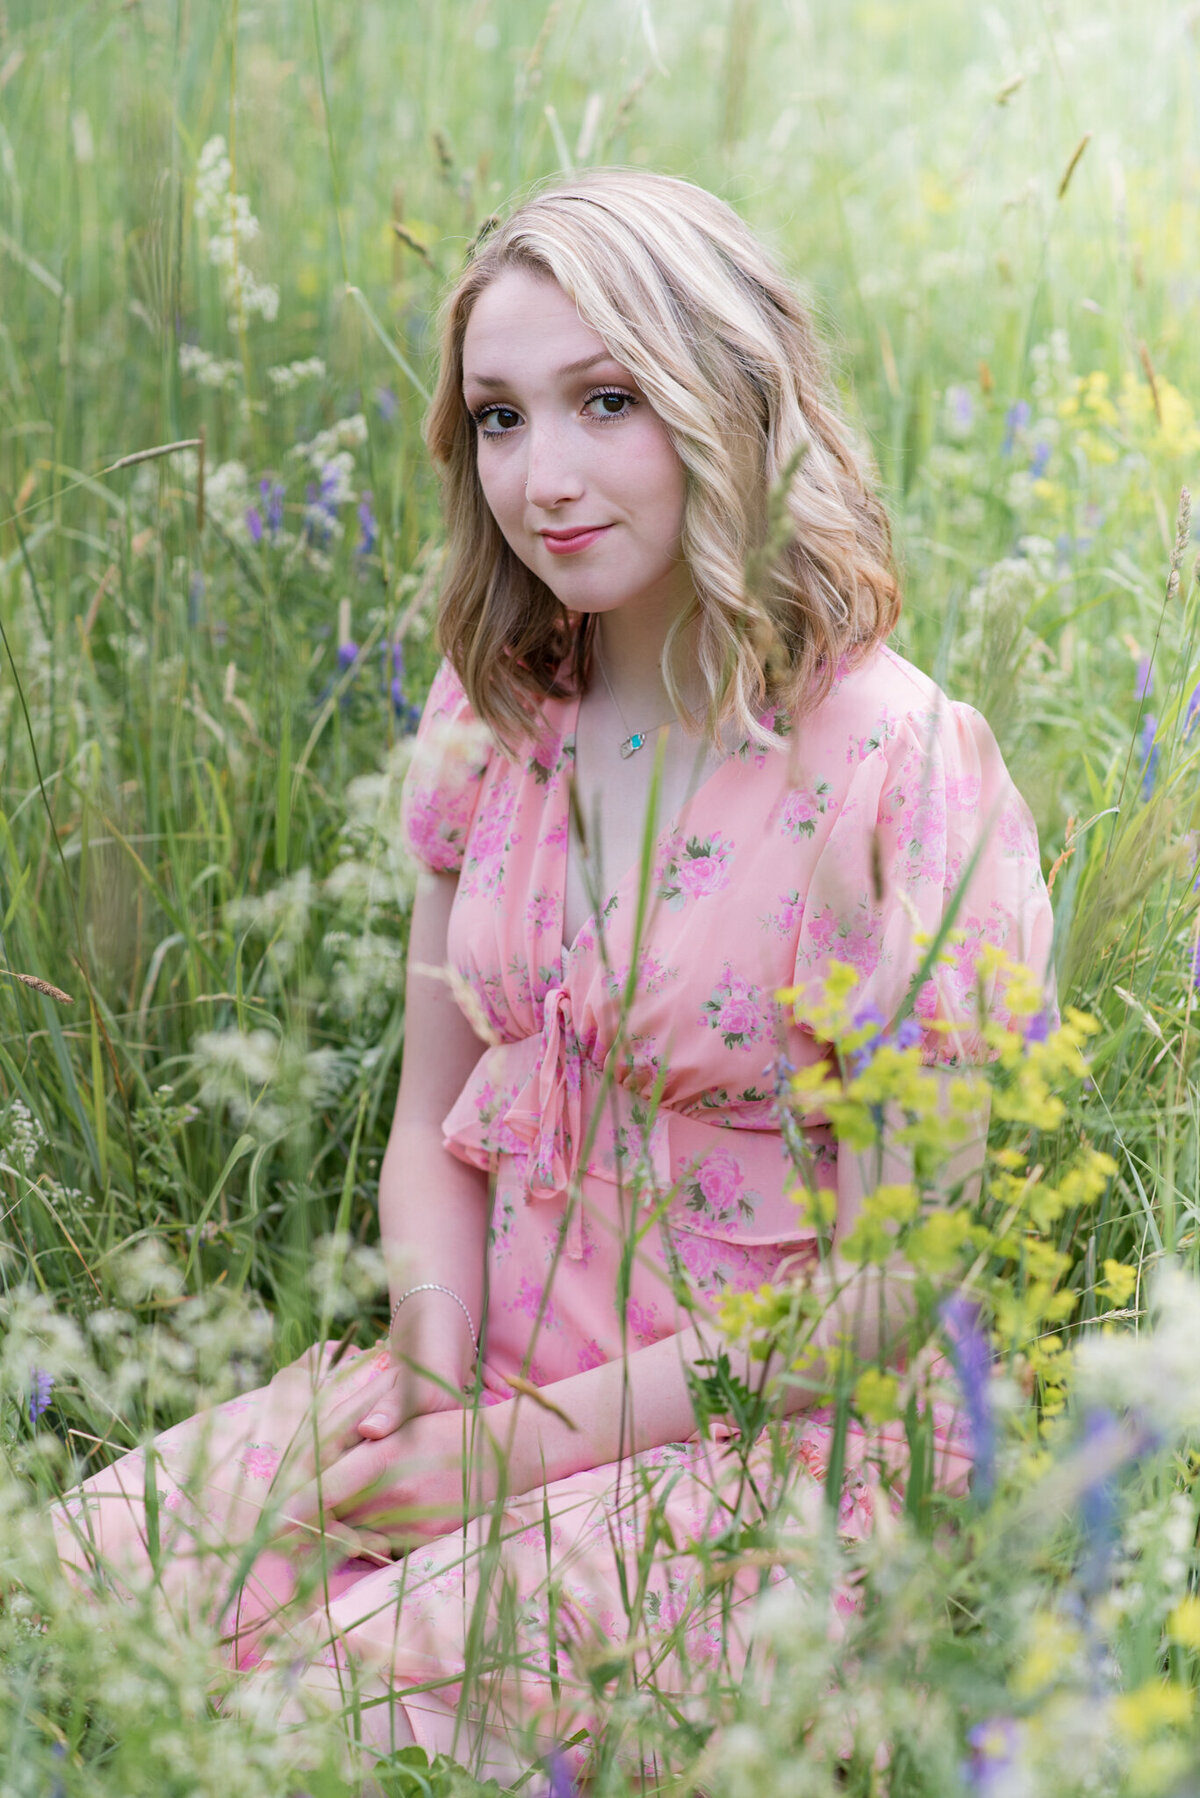 Teen girl in pink dress sitting in a field of wildflowers